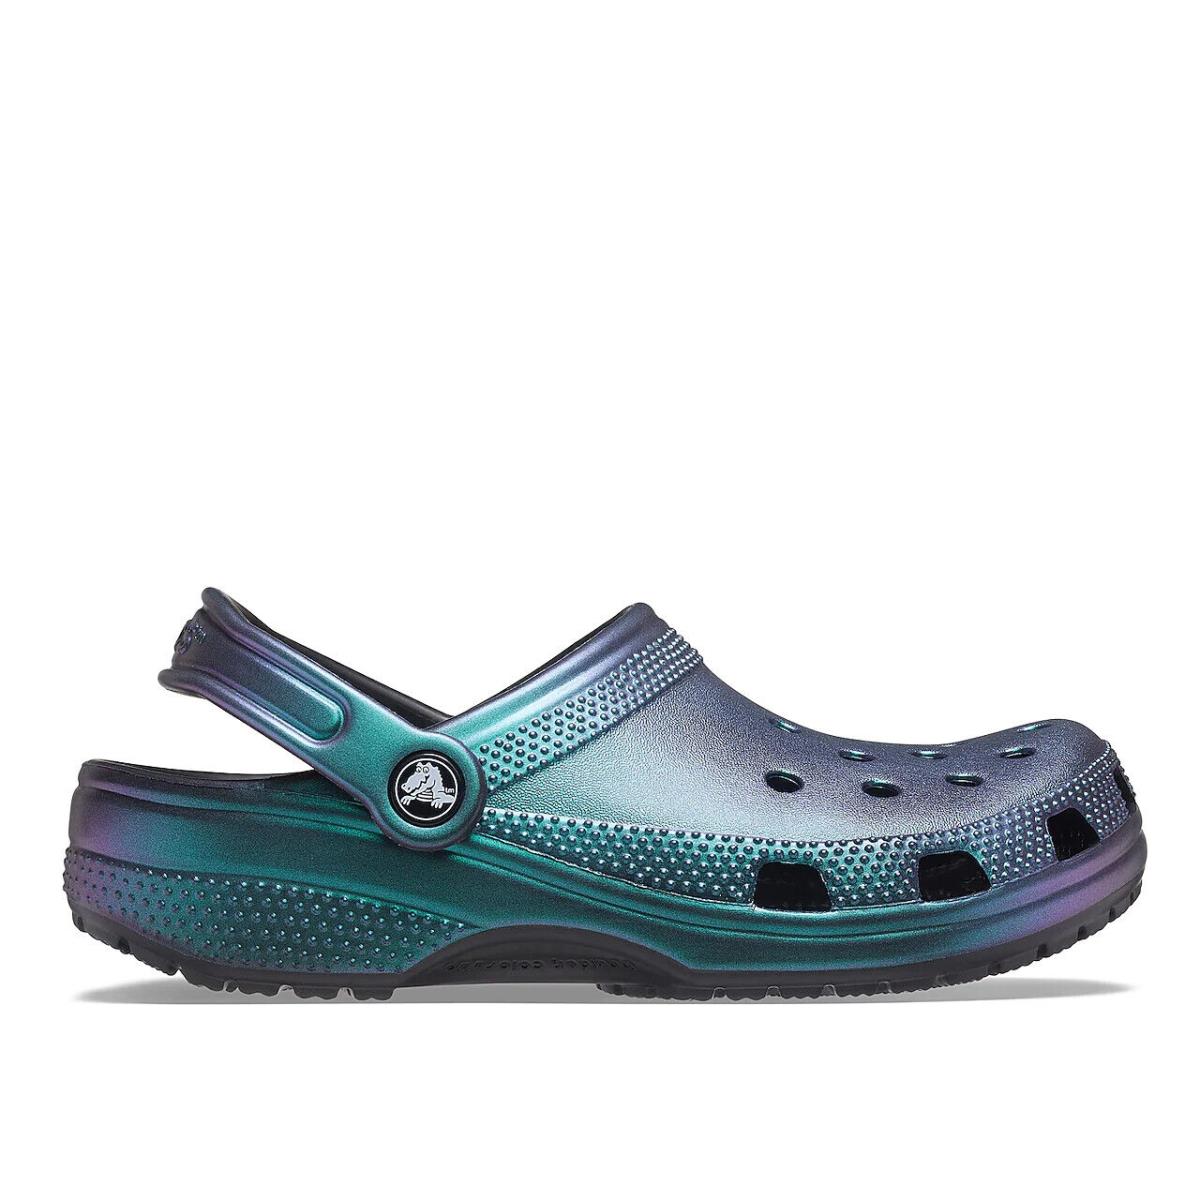 Crocs Prizmatic Iconic Amazing Iridescent Clogs Sandals W 11 I Love Shoes